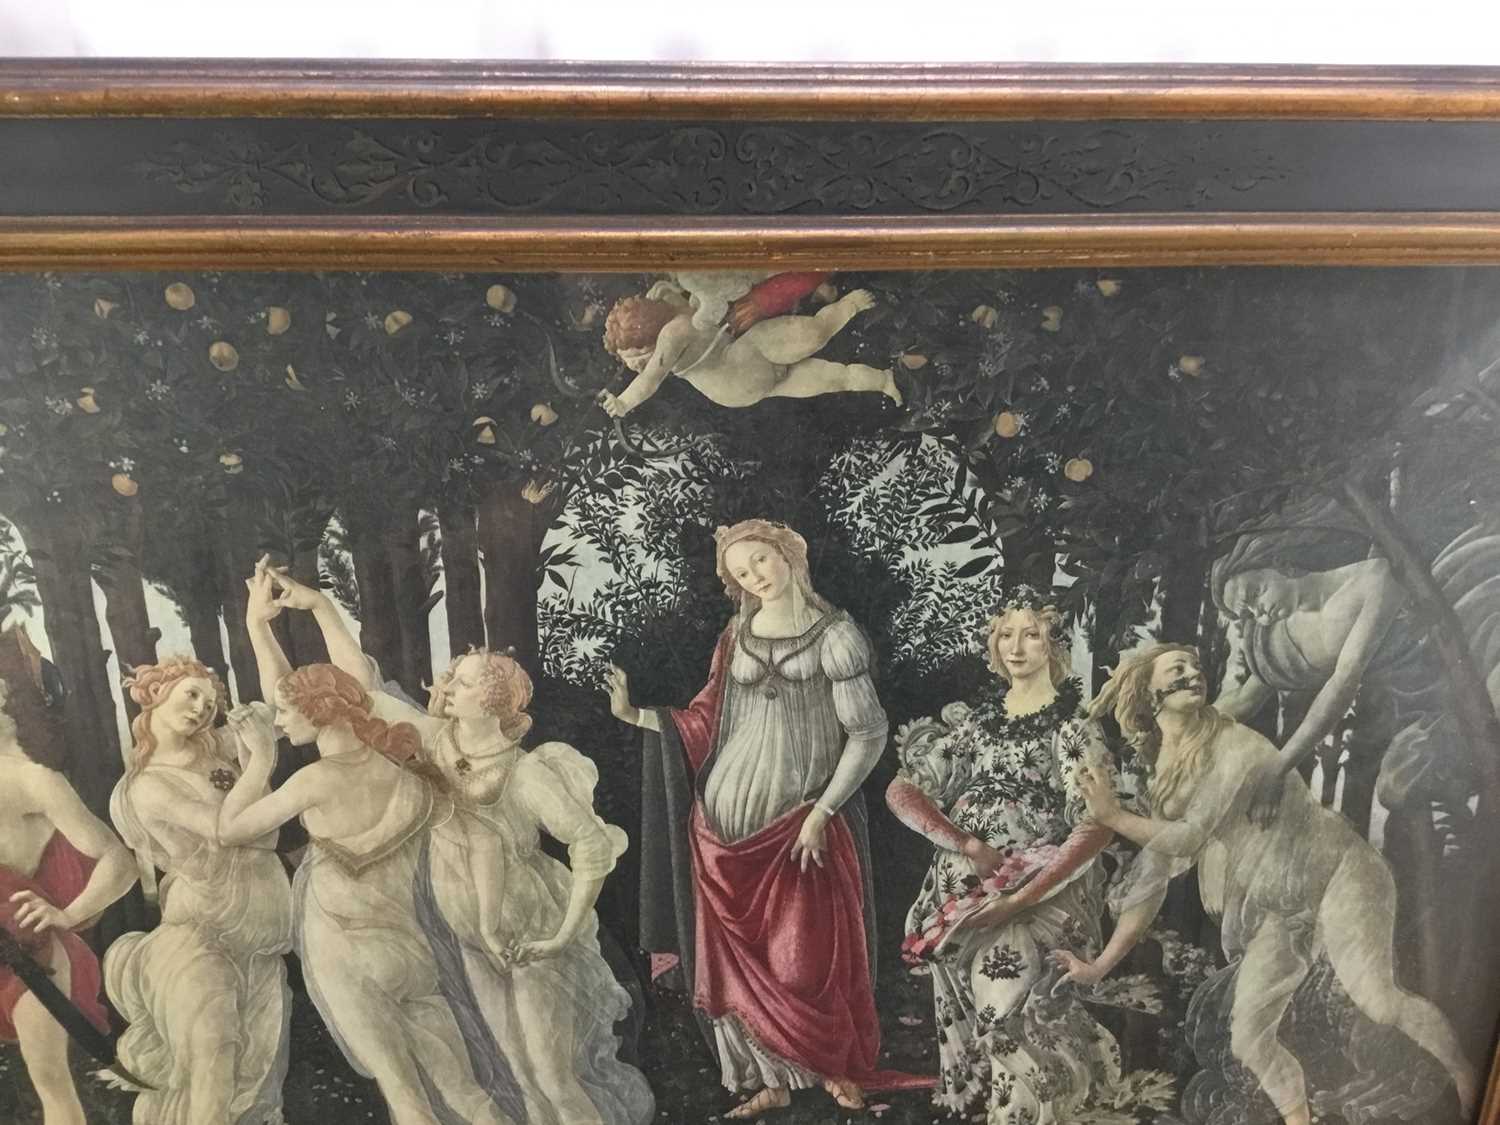 Print after Botticelli, in decorative glazed frame, 107cm x 76cm overall - Bild 6 aus 8